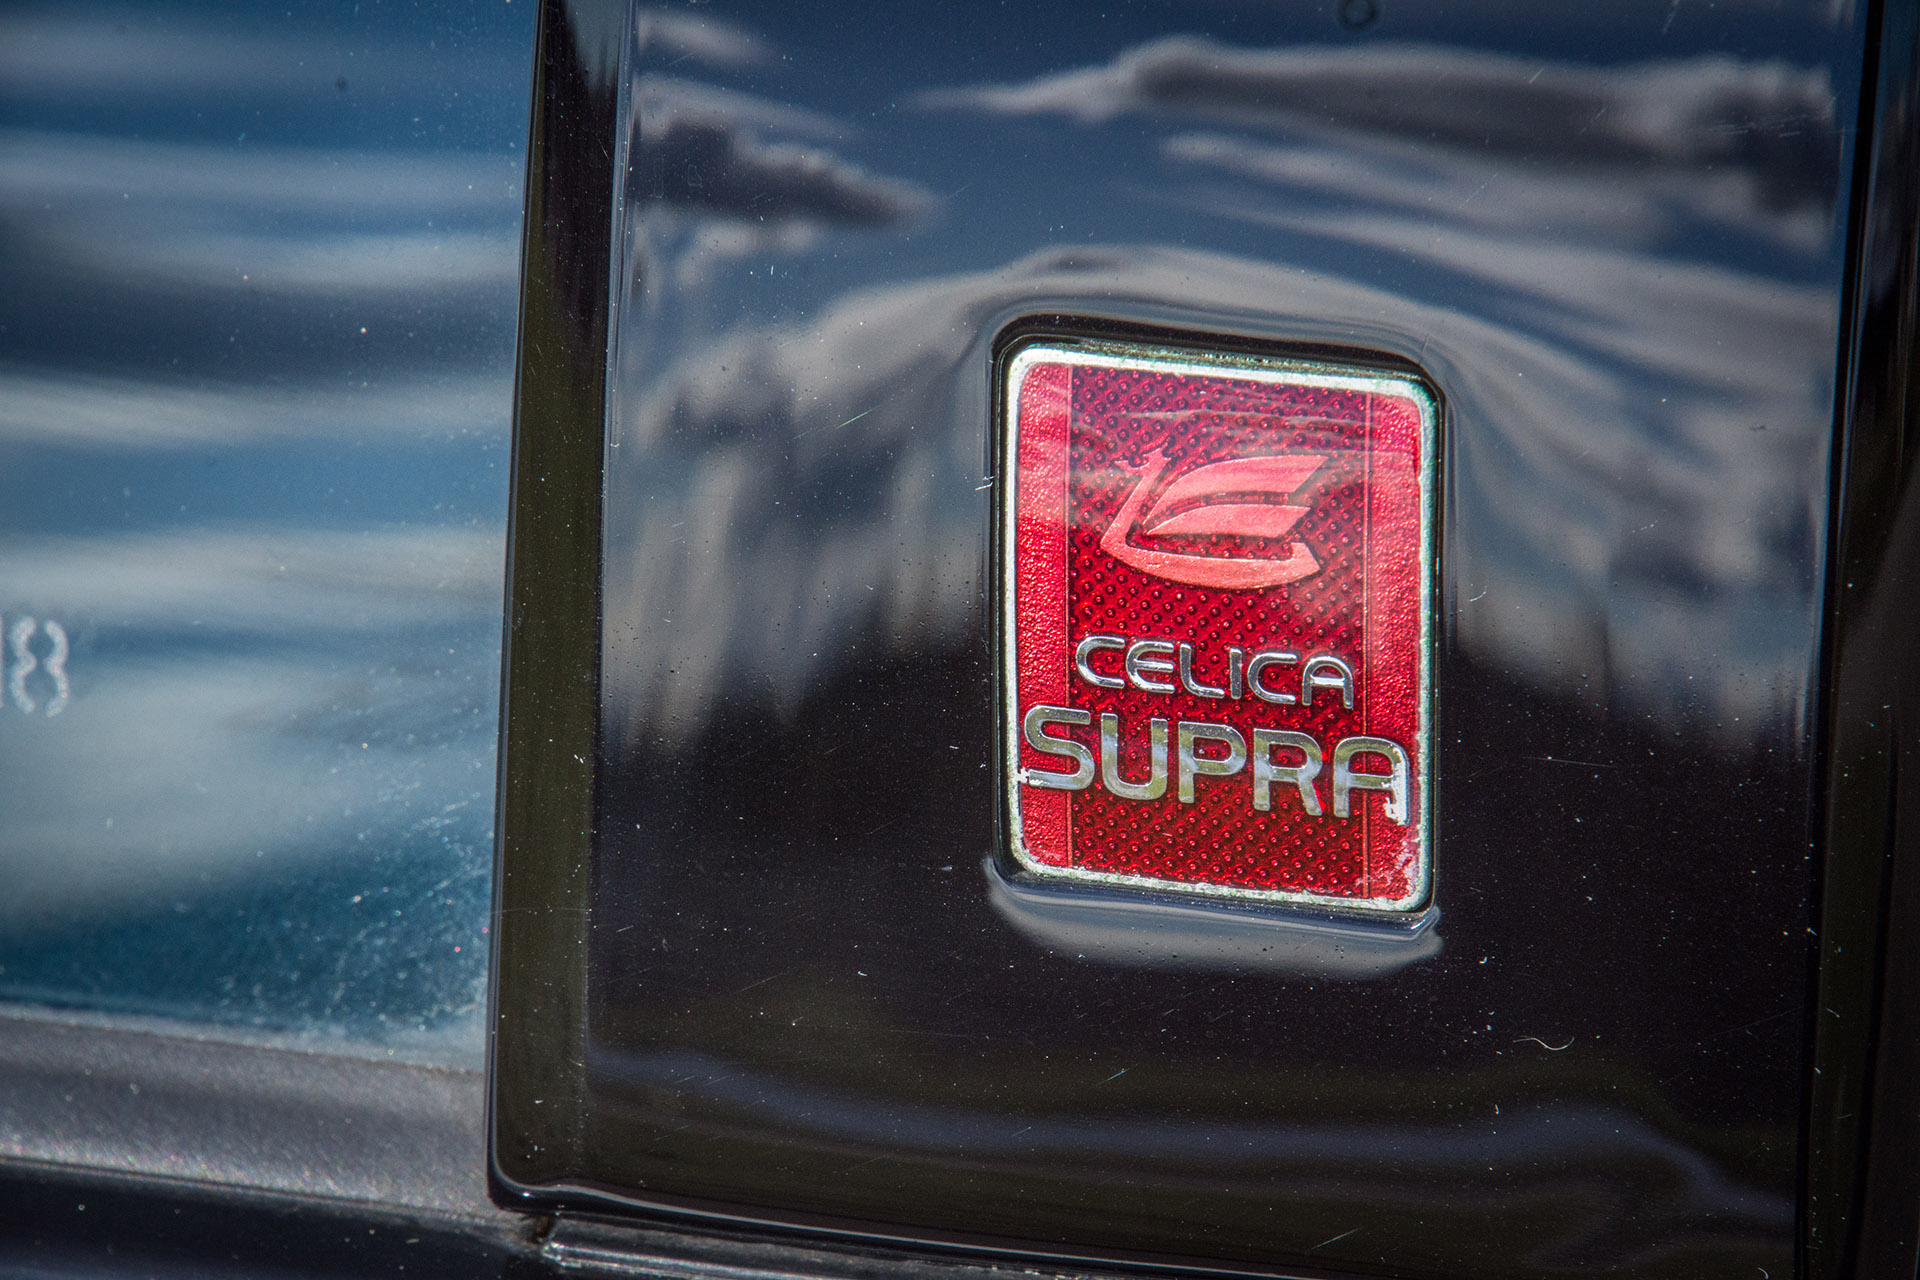 Toyota Celica Supra, modelnaam, embleem, exterieur